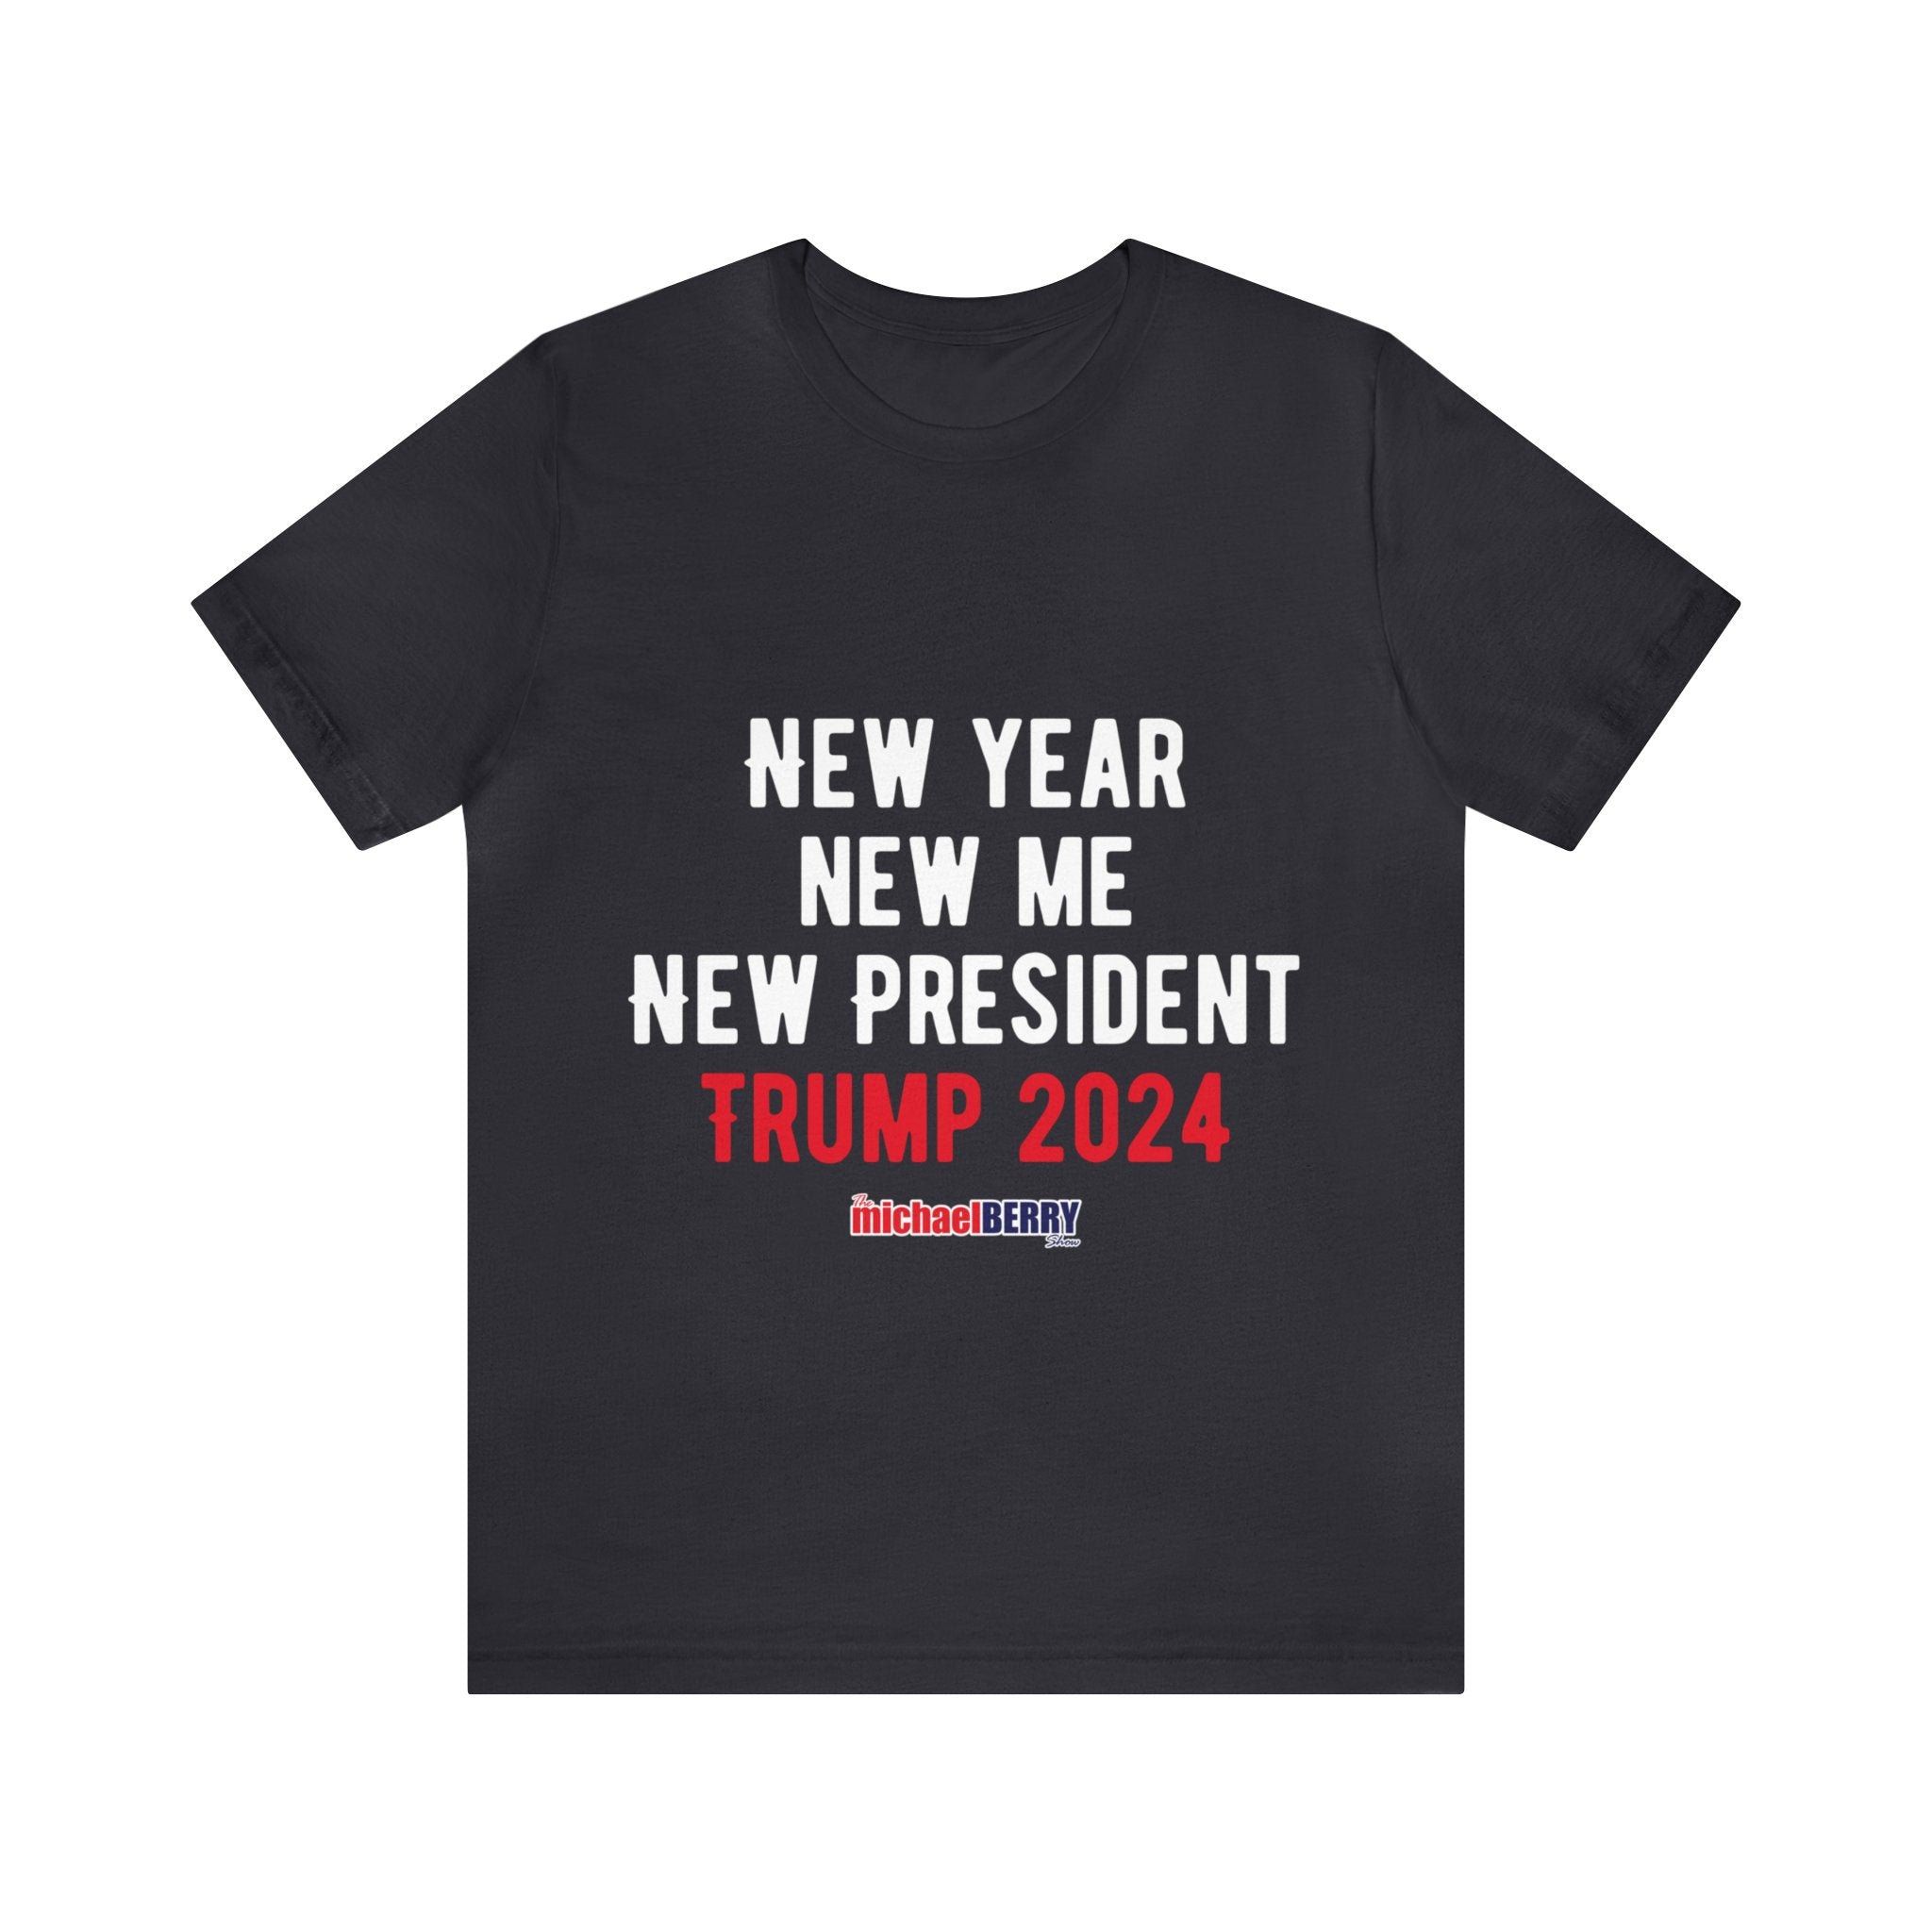 New Year. New Me. New President. Trump 2024 - Men's Short Sleeve Tee